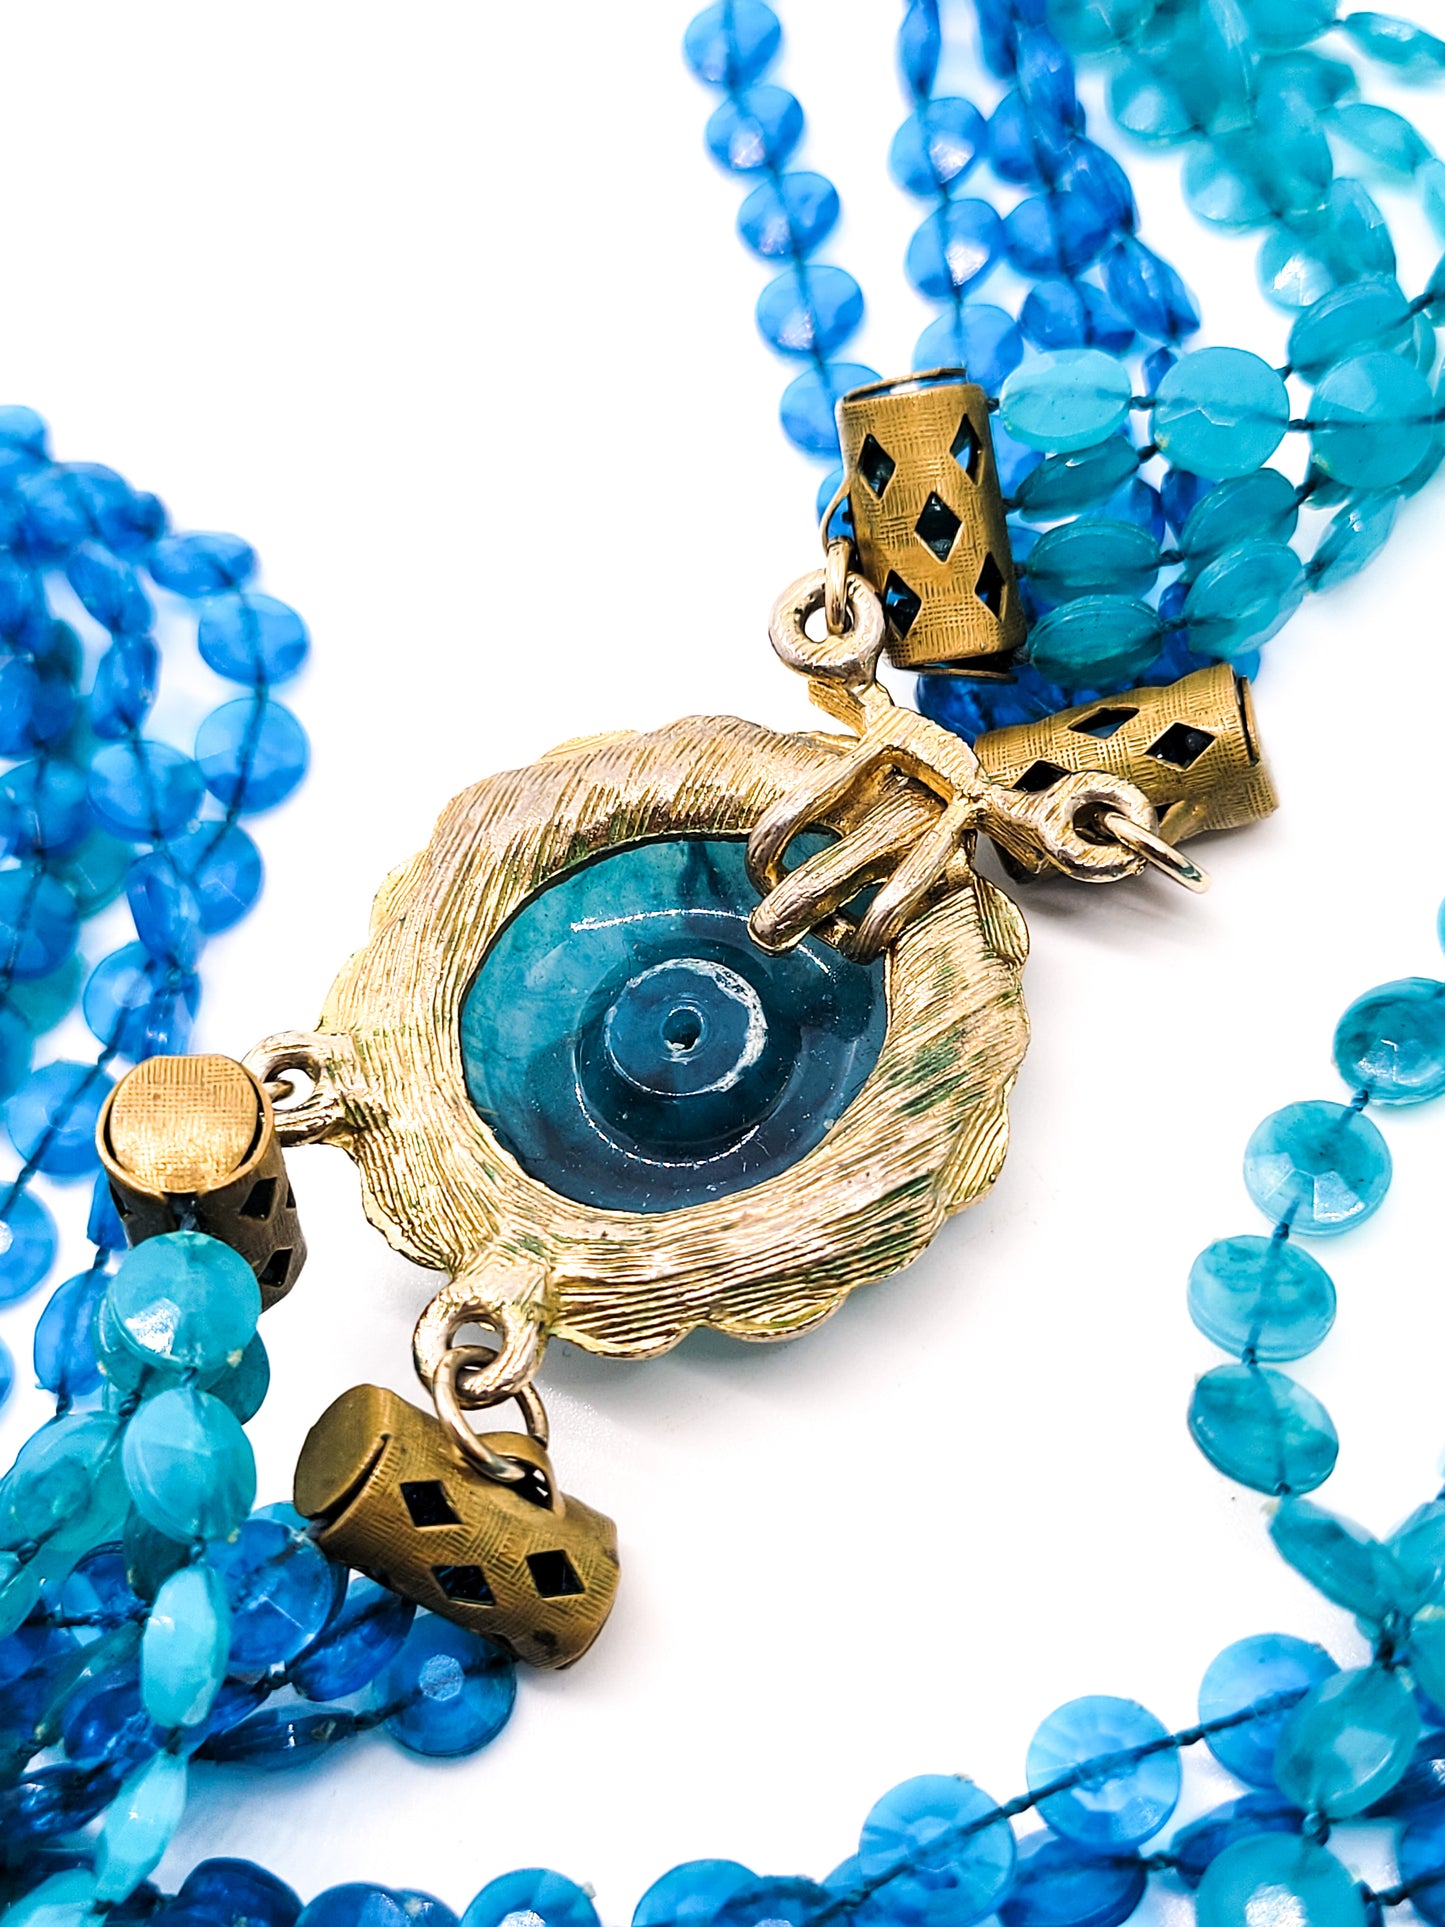 Baby blue 8 strand vintage large blue plastic statement necklace